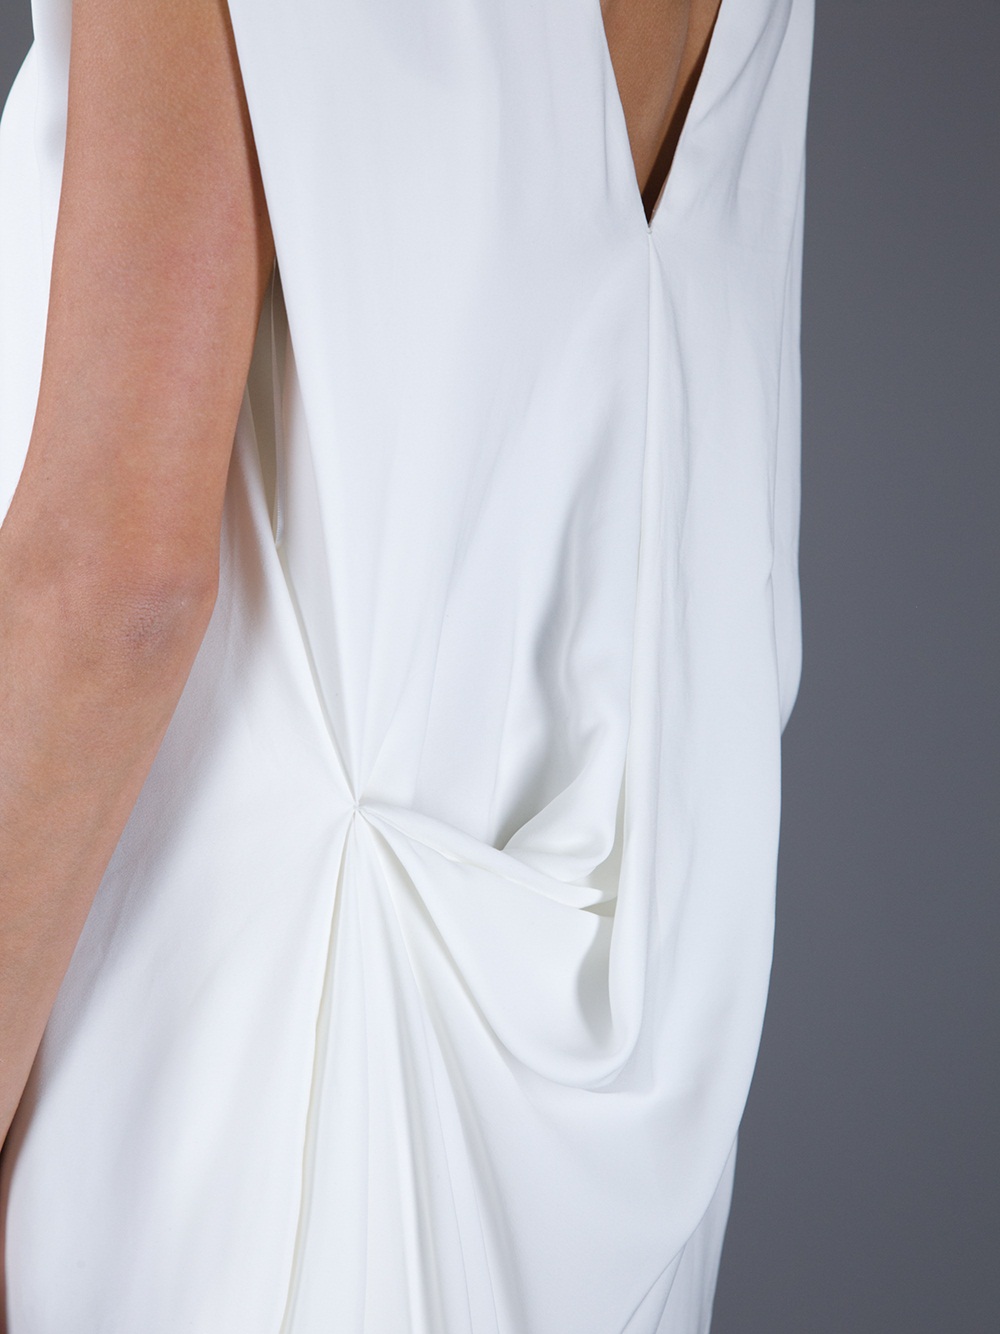 Lanvin Draped Dress in White - Lyst